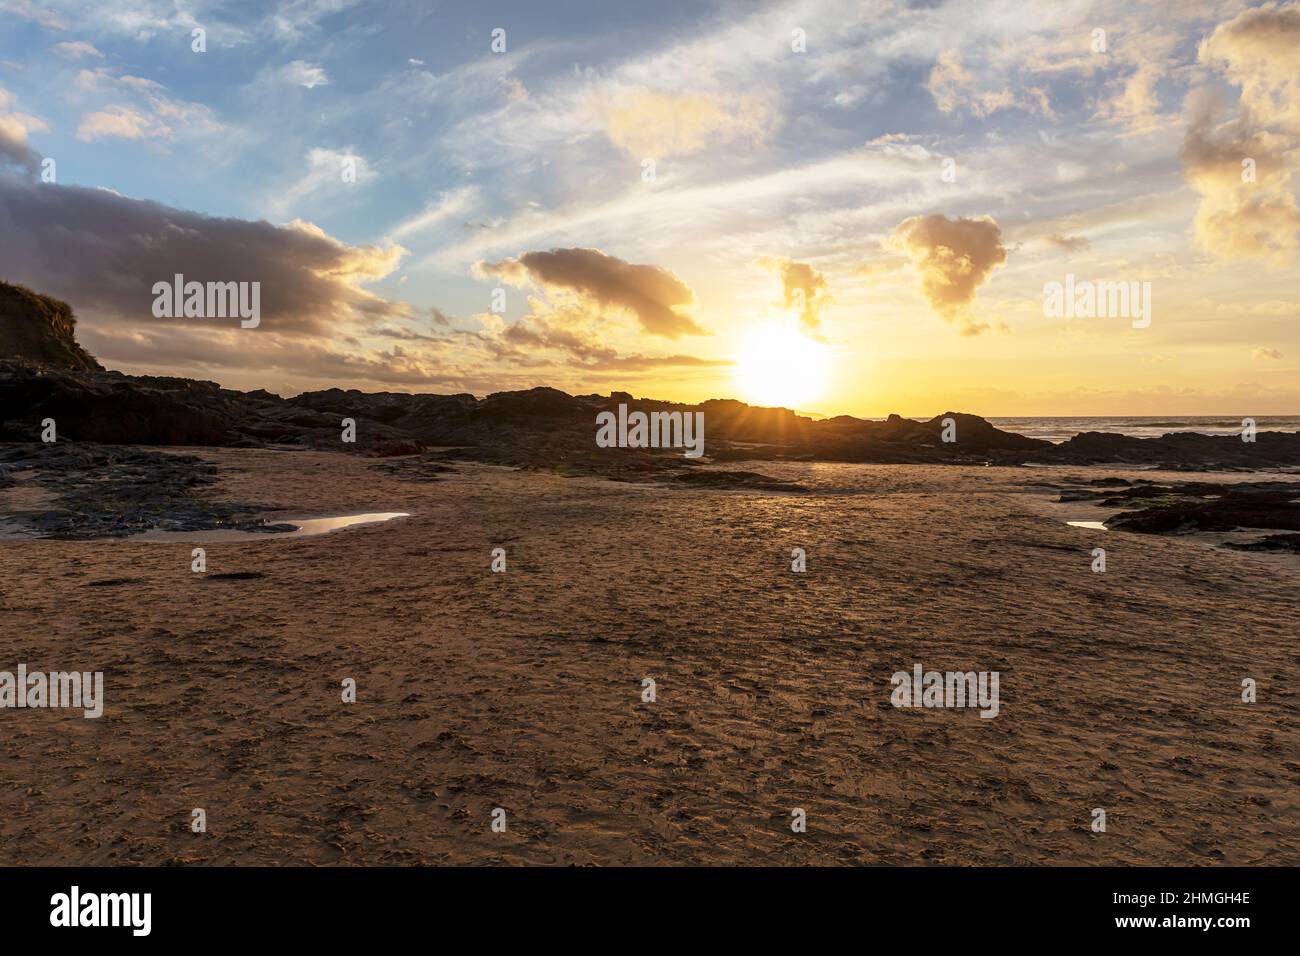 Hayle beach, Cornwall, Reino Unido, Inglaterra, puesta de sol, Puesta de sol de Hayle, puesta de sol de Cornwall, playa, puesta de sol de playa, Cornish, Hayle, costa, costa, arena, arena, mar, Foto de stock